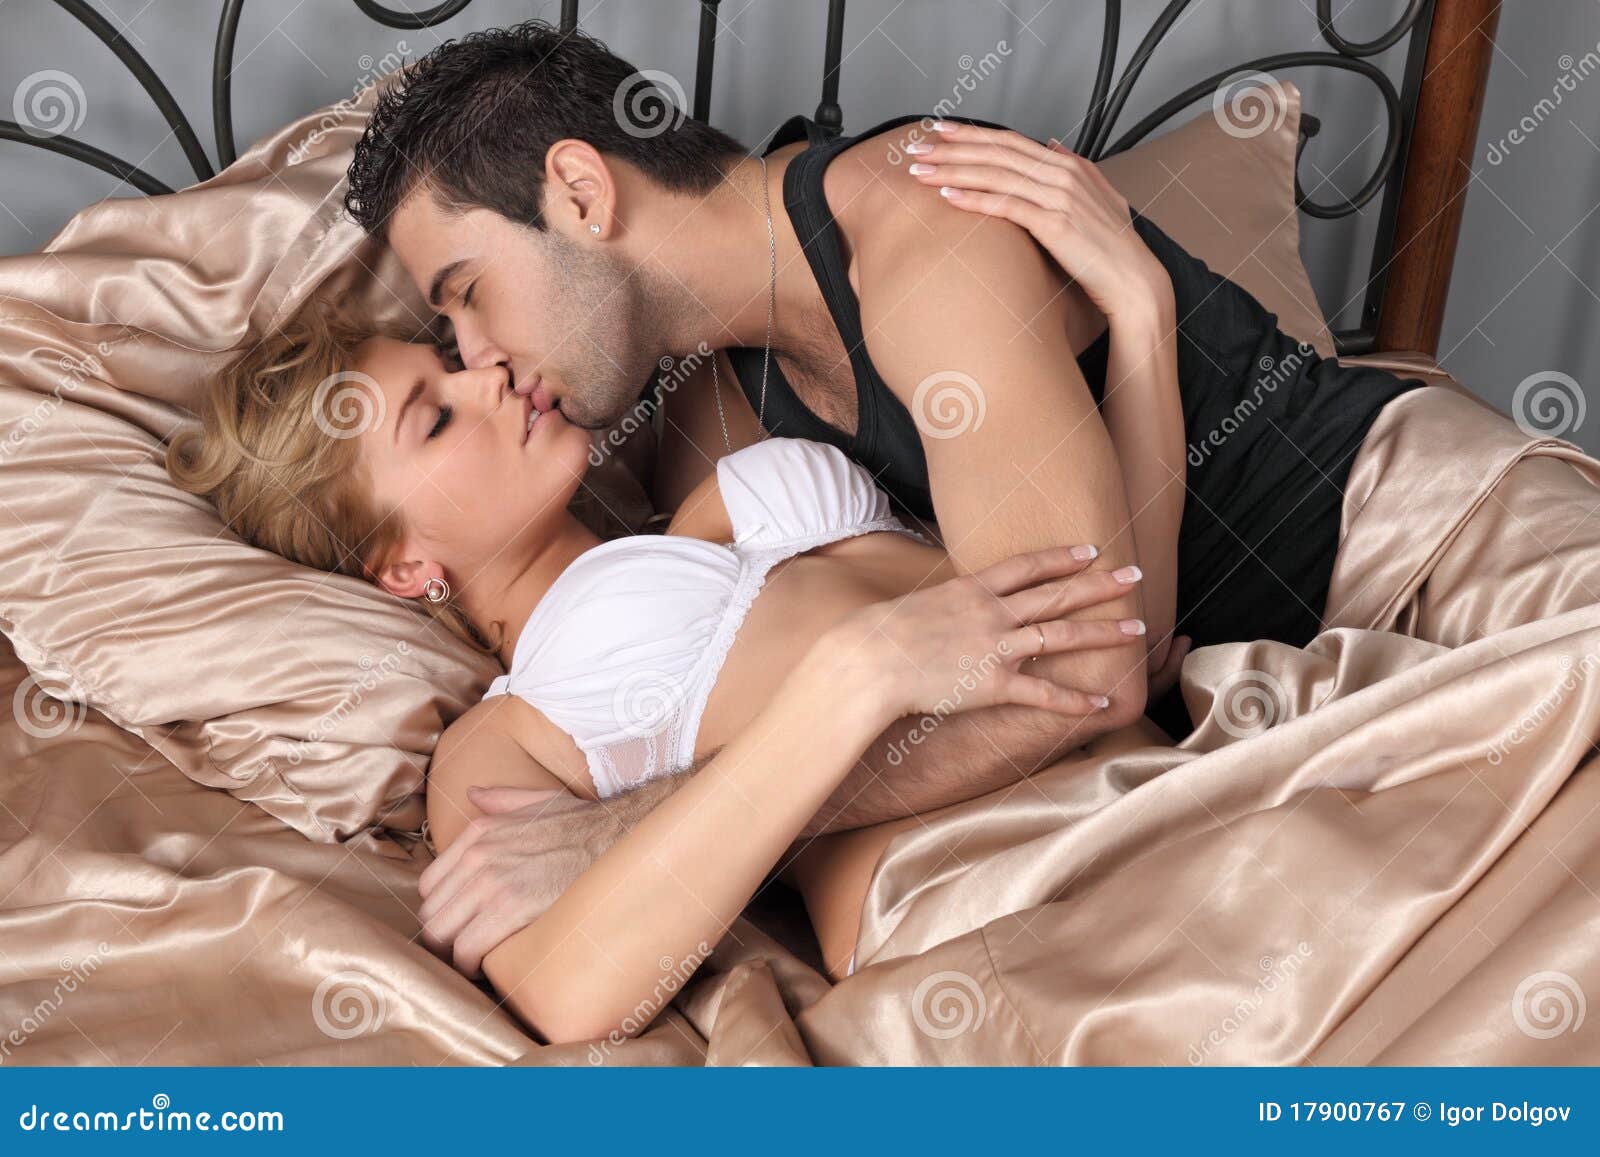 сонник сон если женщина видит во сне голых мужчин фото 86